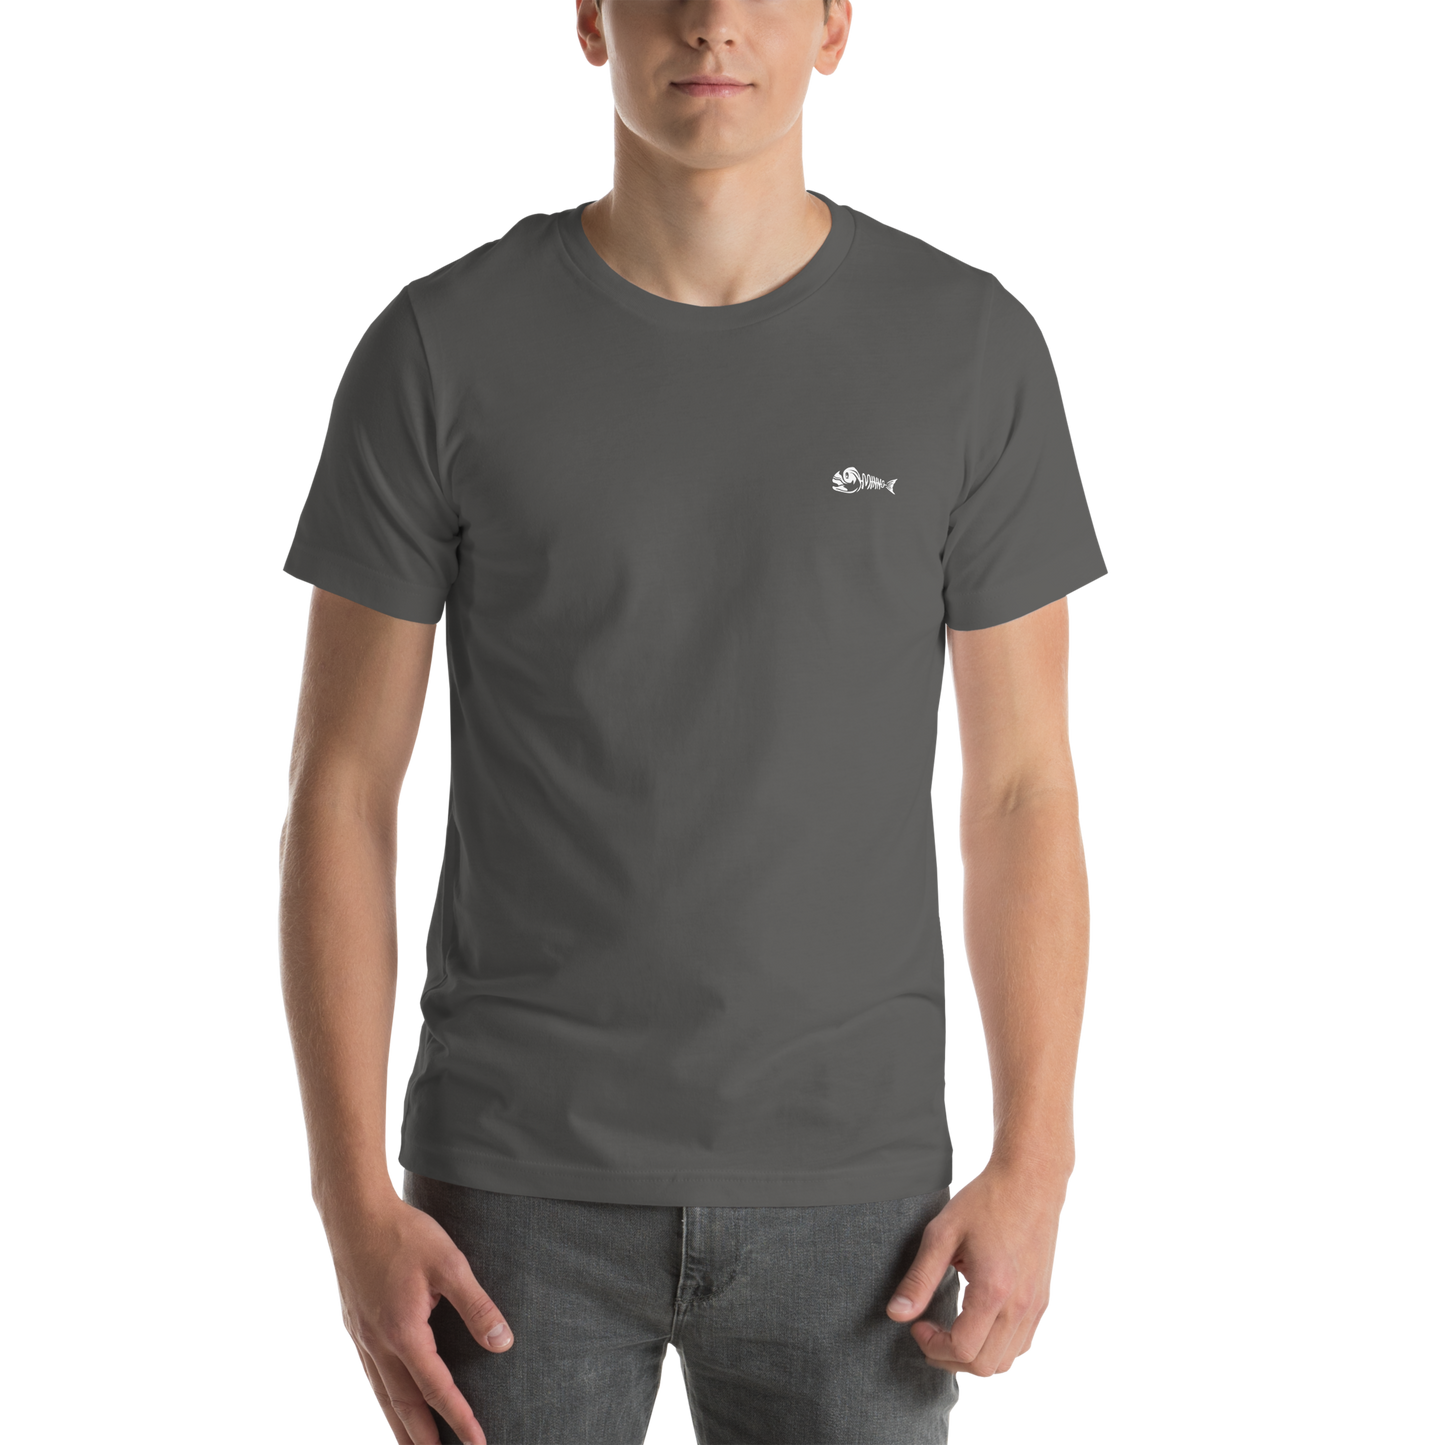 Minno Unisex T-shirt - Footy